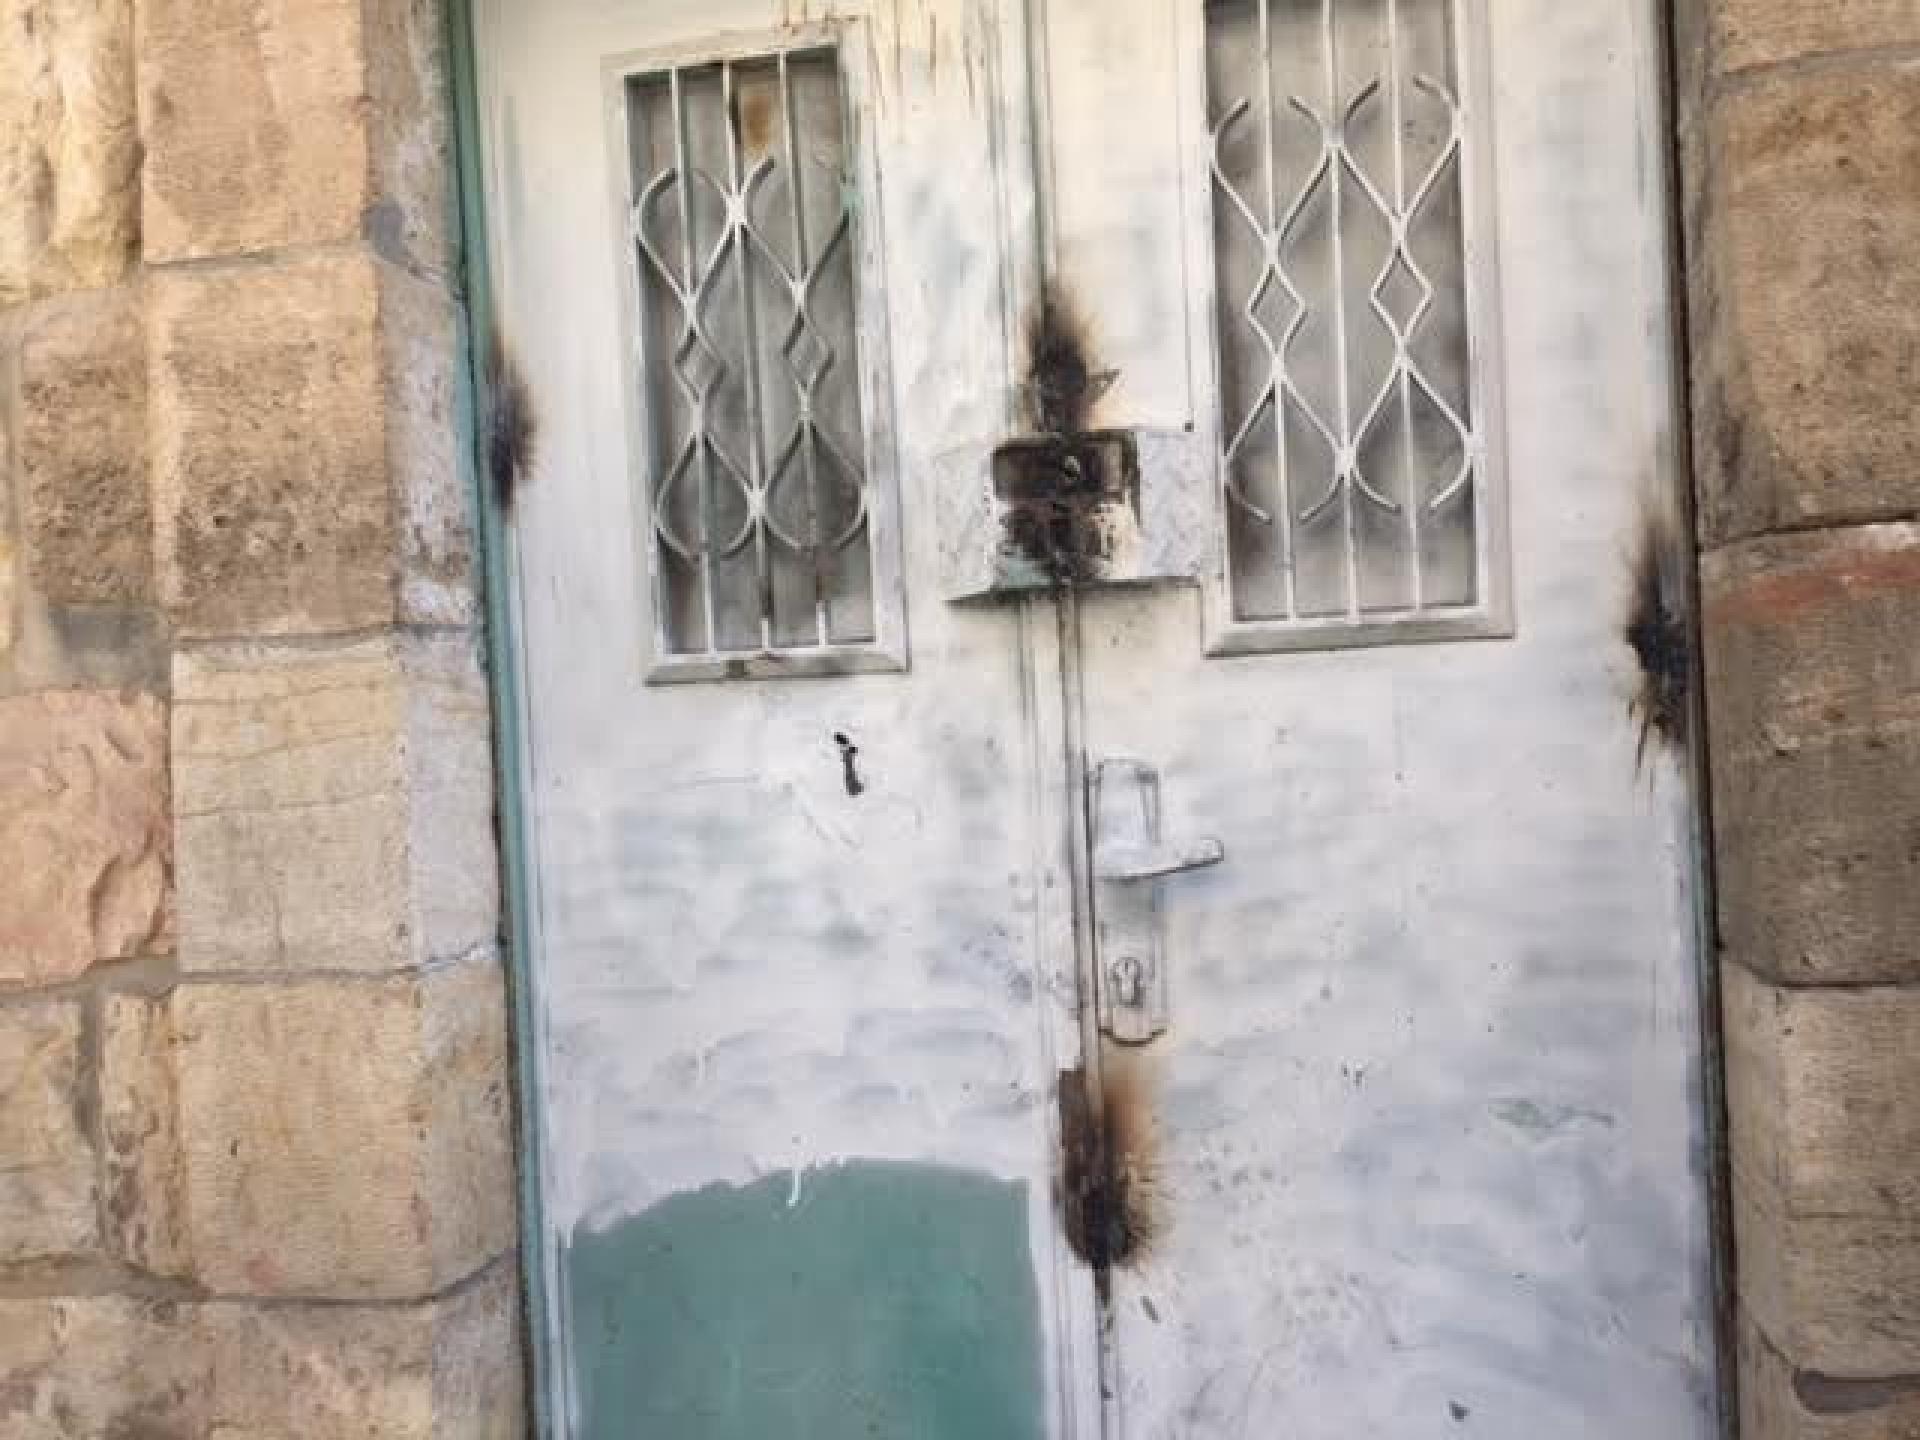 The newly welded door on Shuhada Street